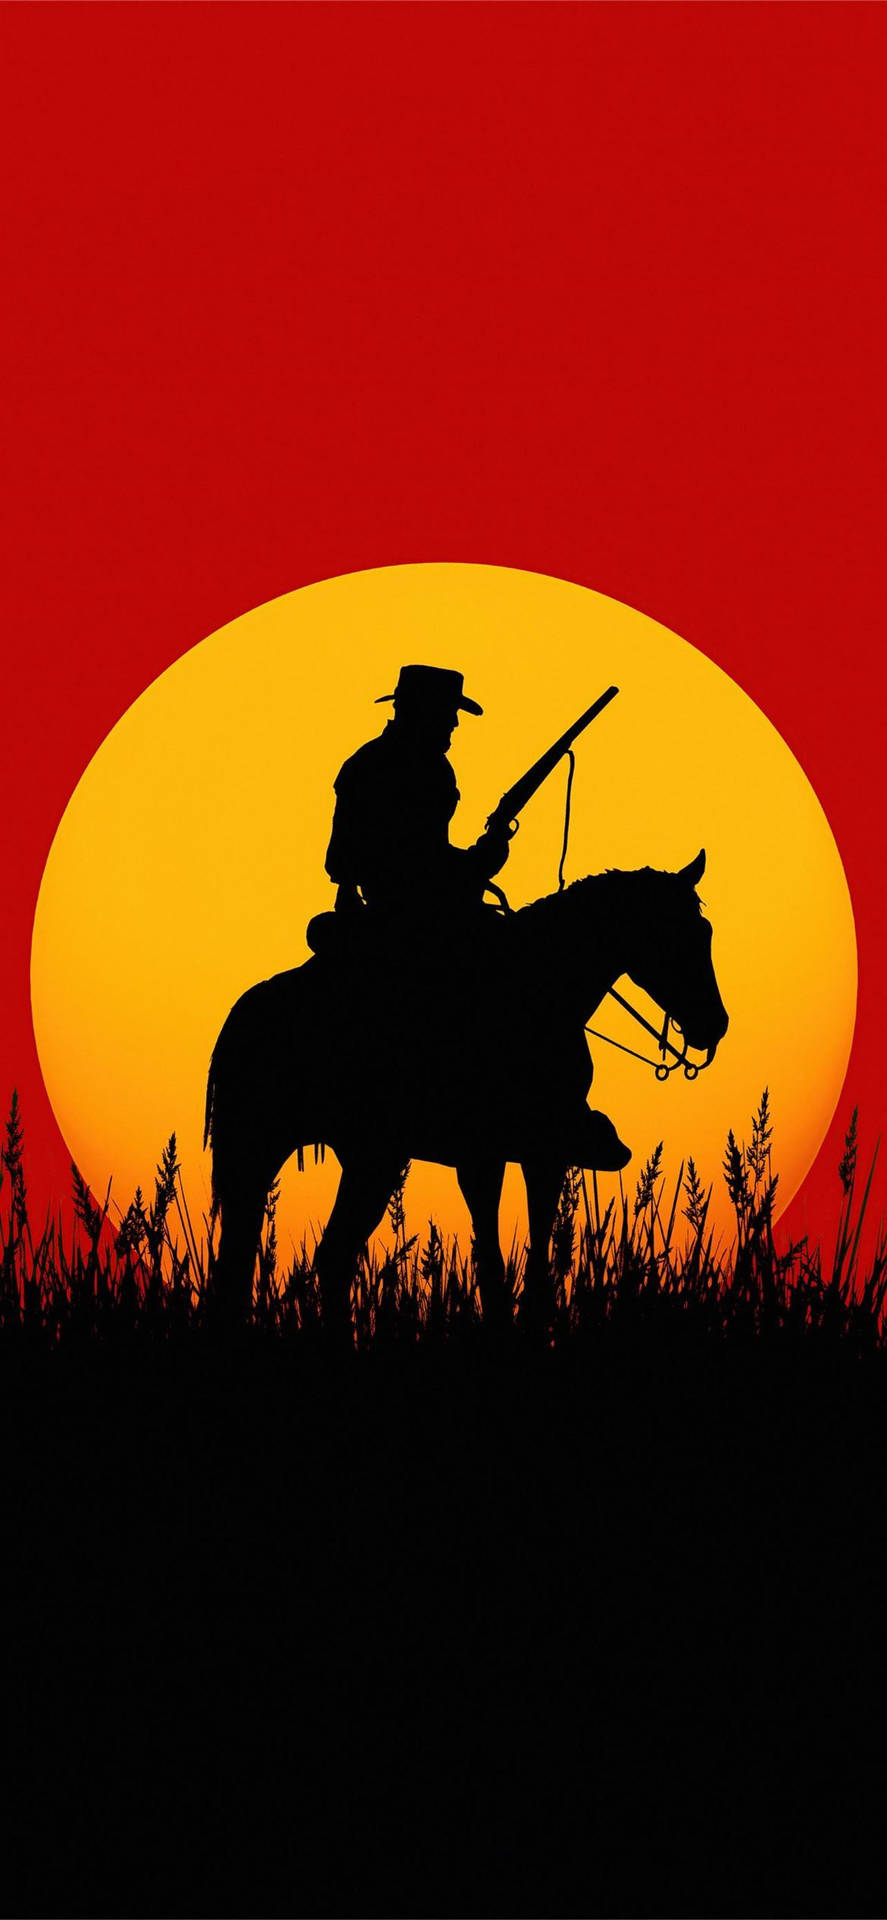 Free Red Dead Redemption Wallpaper Downloads, [100+] Red Dead Redemption  Wallpapers for FREE 